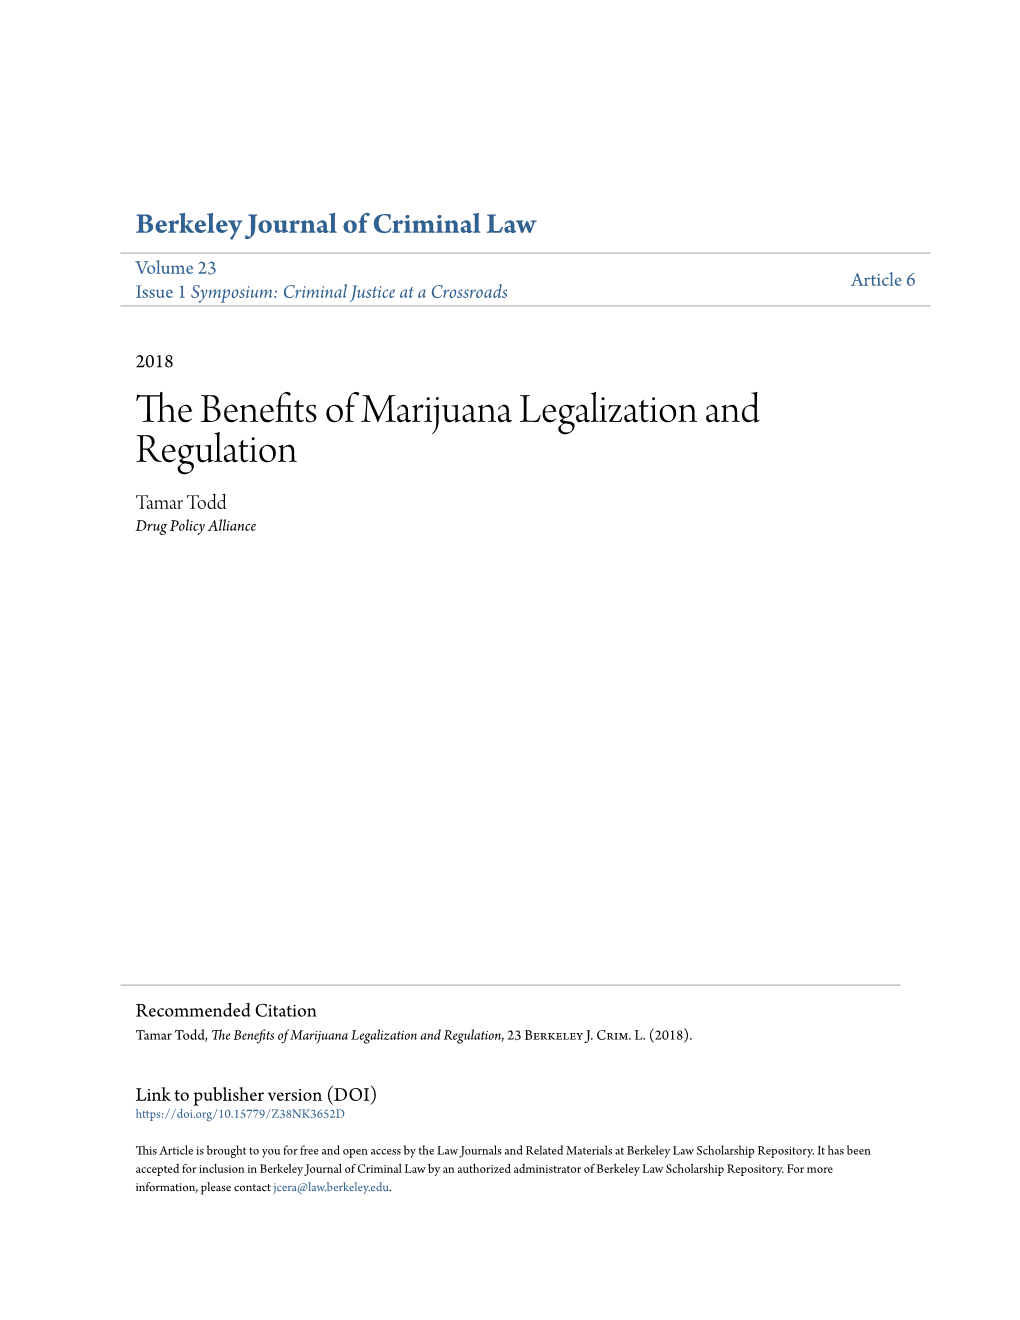 The Benefits of Marijuana Legalization and Regulation Tamar Todd Drug Policy Alliance